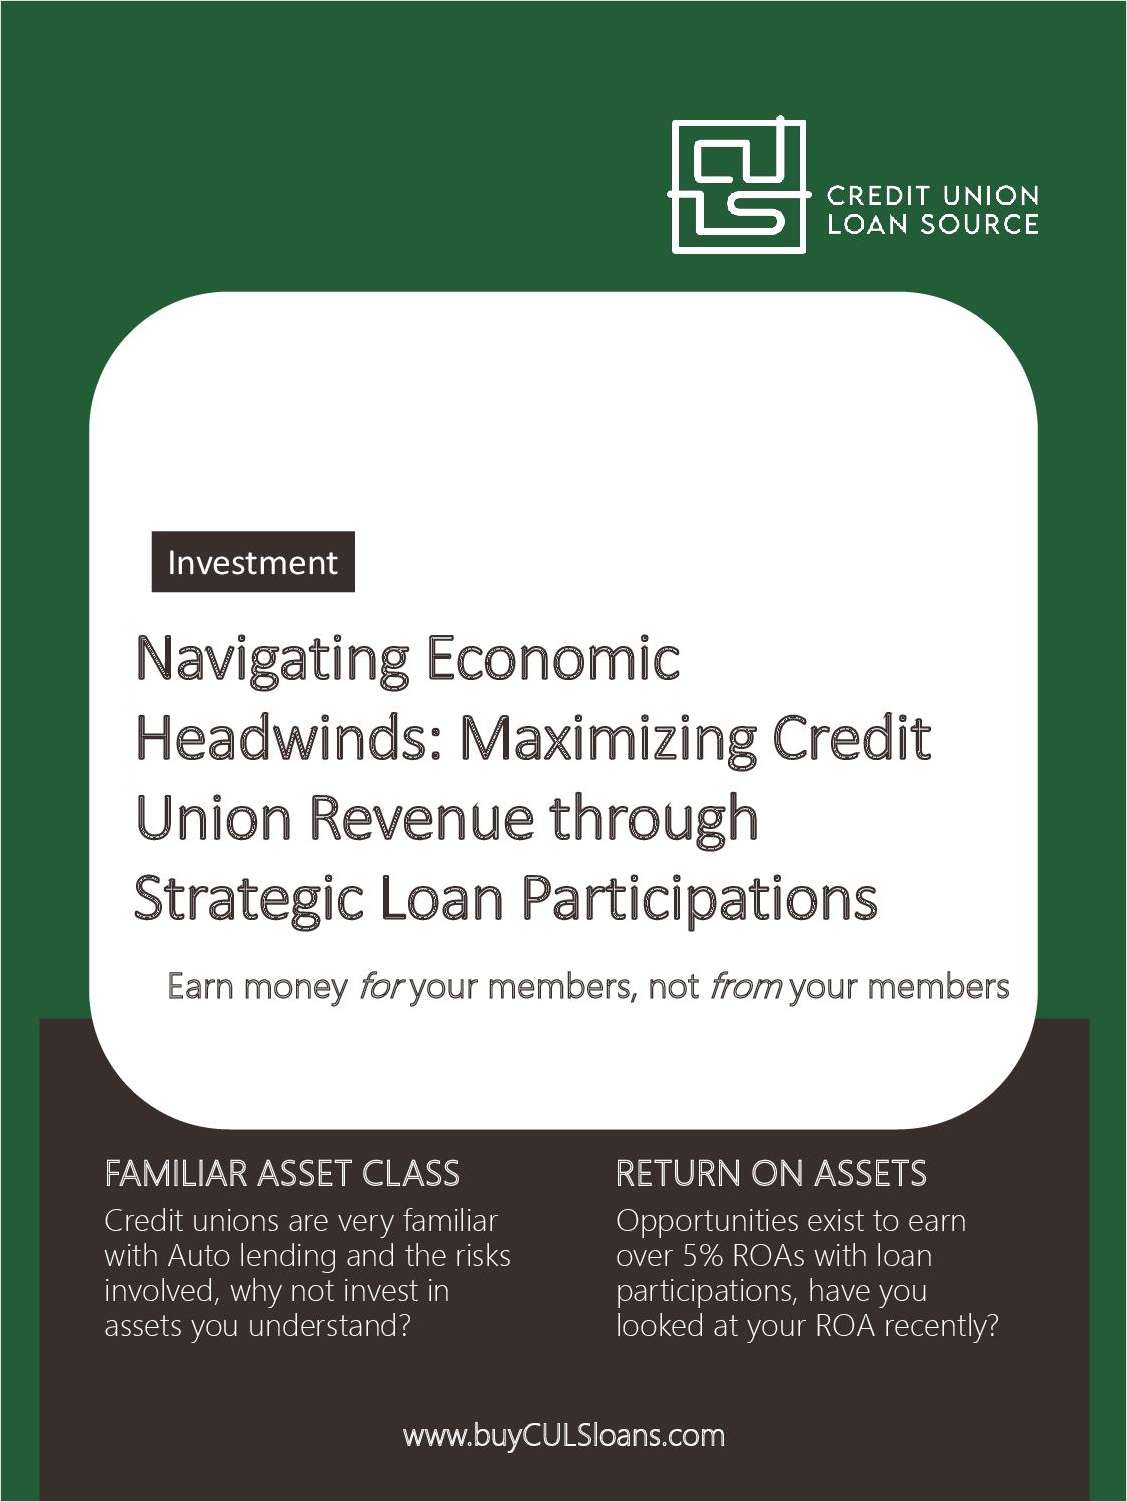 Maximizing Credit Union Revenue through Strategic Loan Participations link